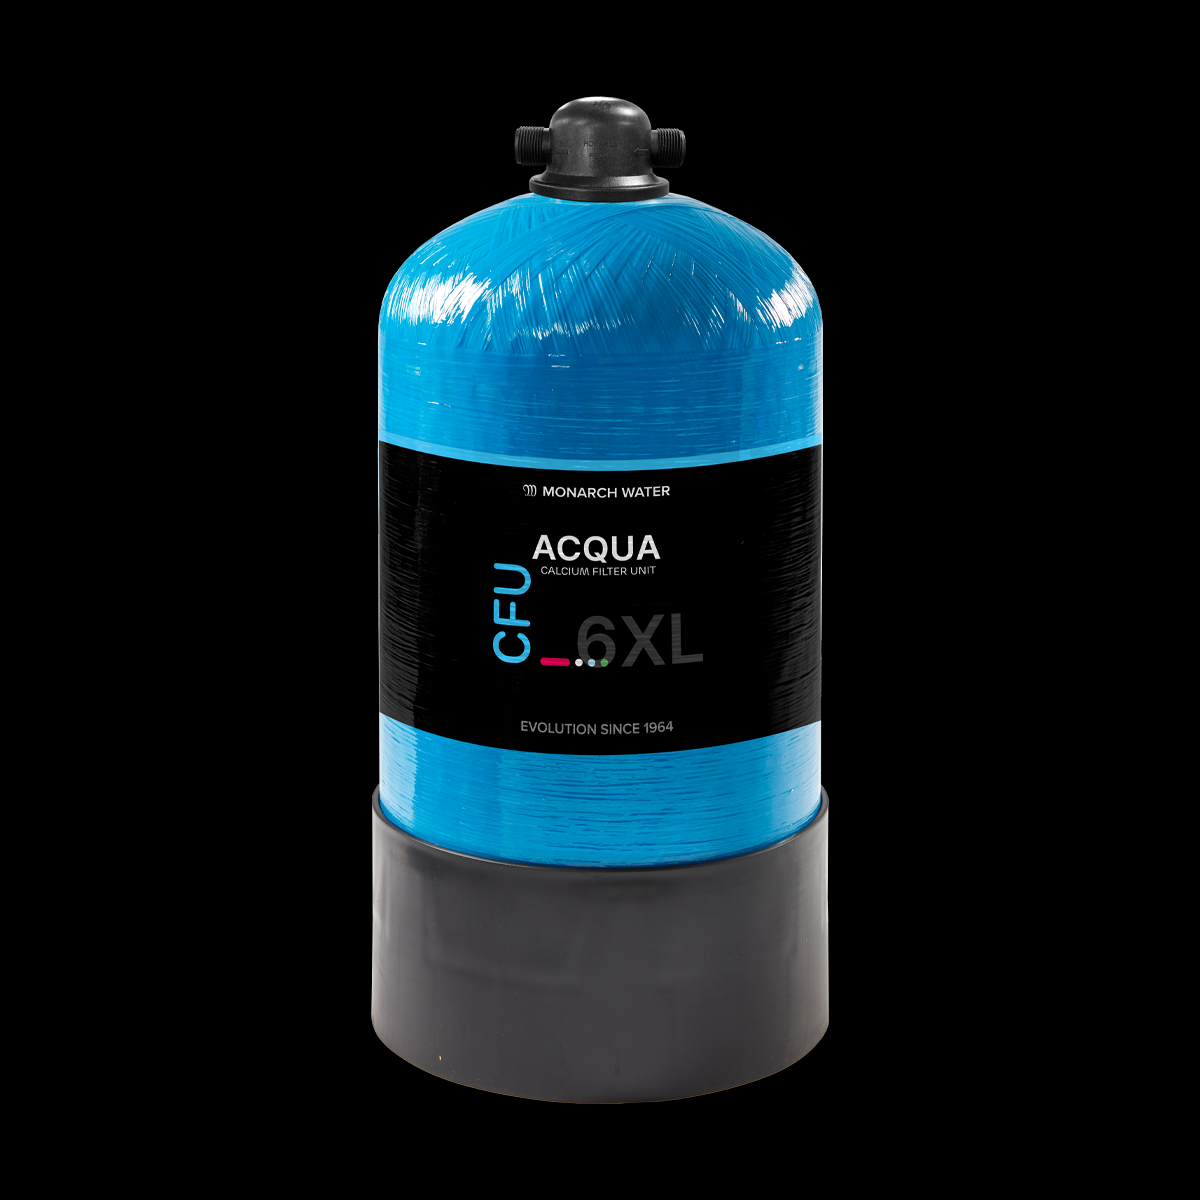 Calcium Filter Unit ACQUA 6XL by Monarch Water.